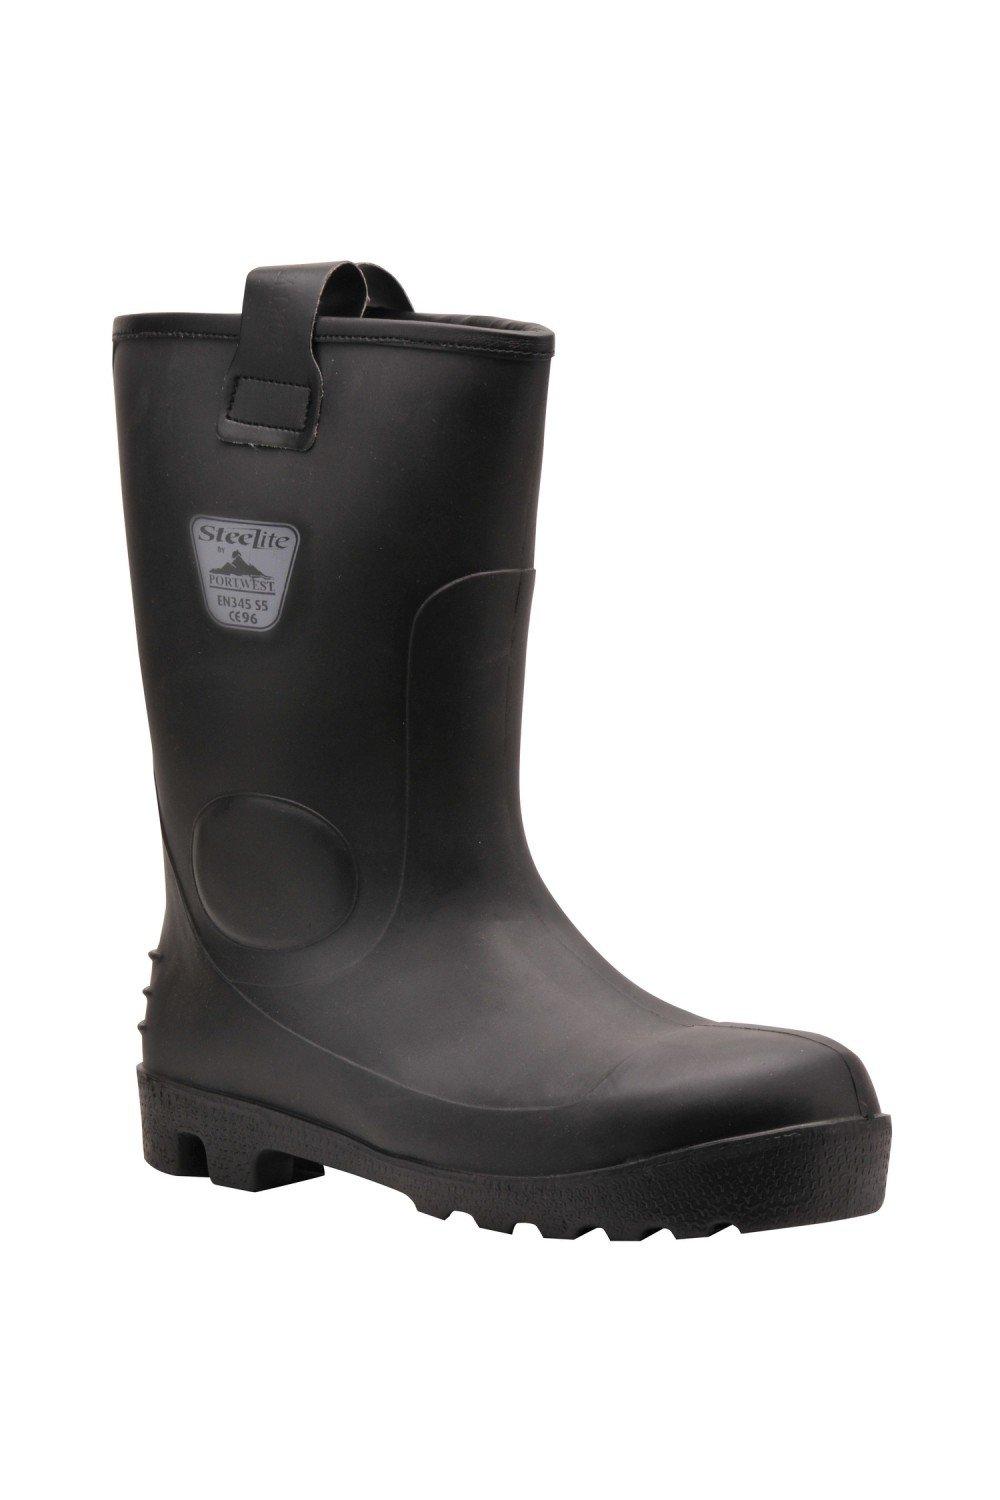 Steelite Neptune Waterproof Safety Rigger Boots